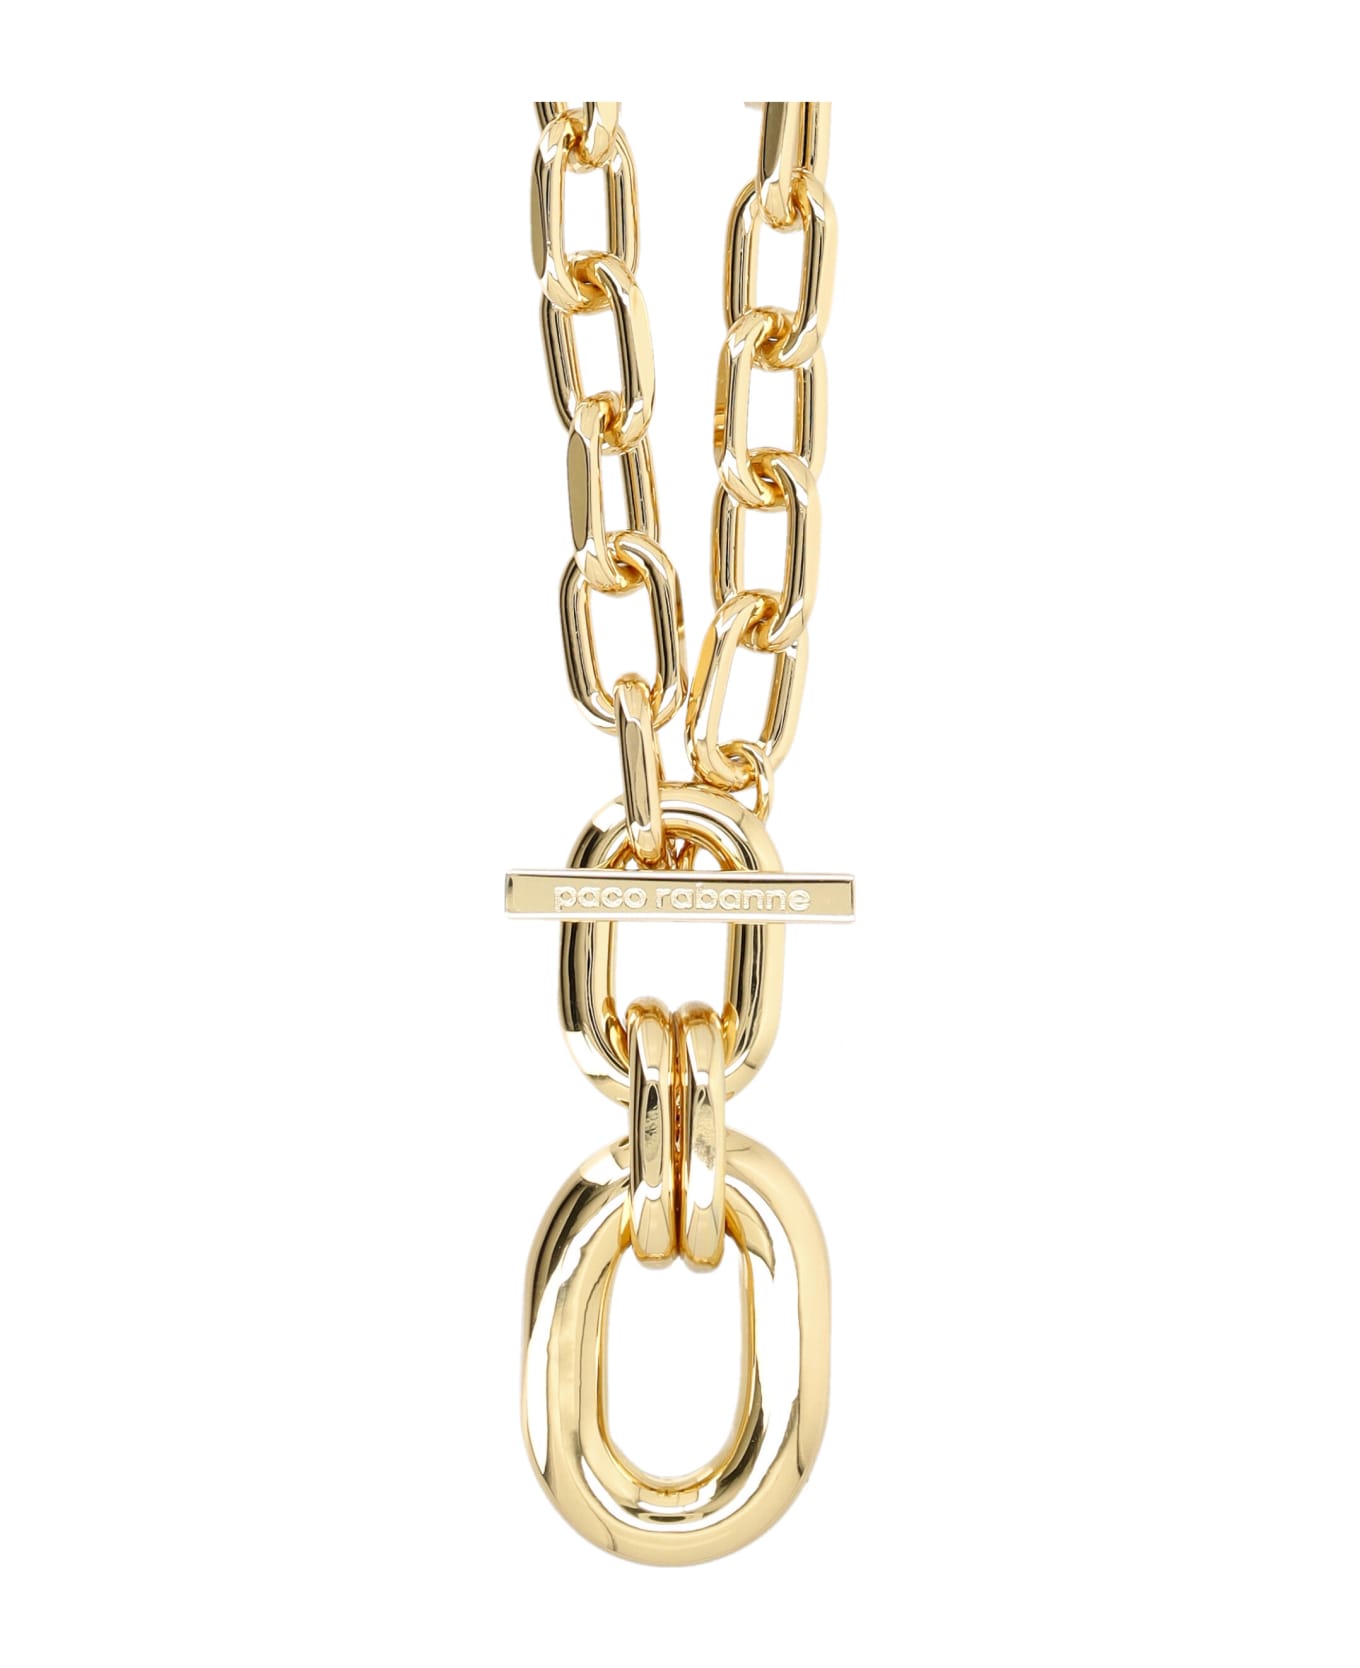 Paco Rabanne Xl Link Pendant Necklace - Gold